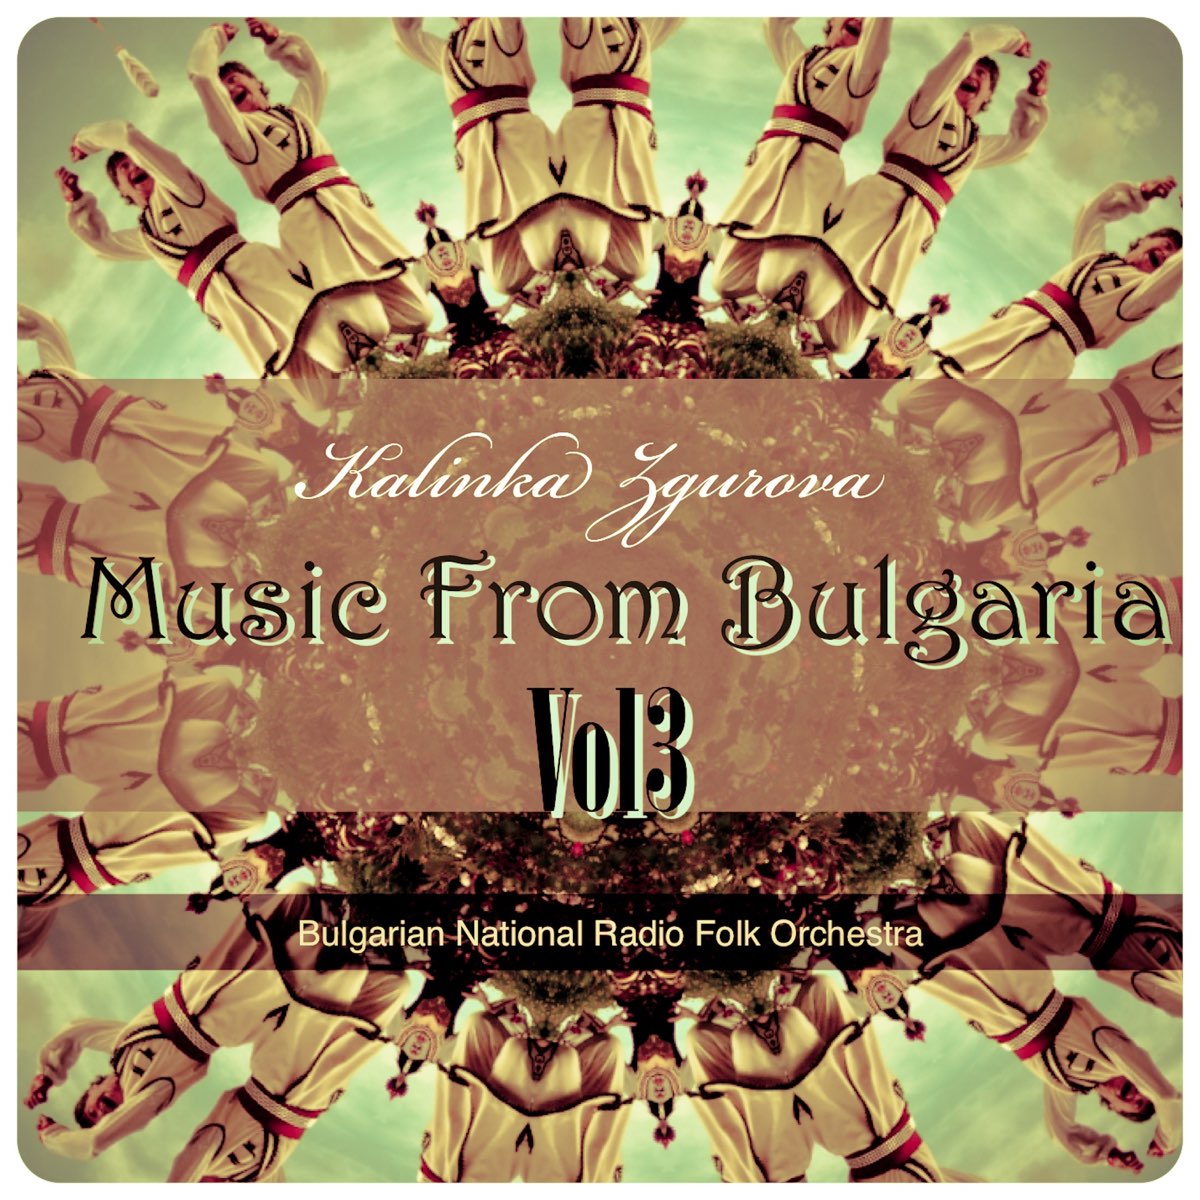 Music From Bulgaria, Vol. 3 by Bulgarian National Radio Folk Orchestra,  Kalinka Zgurova & Emil Kolev on Apple Music